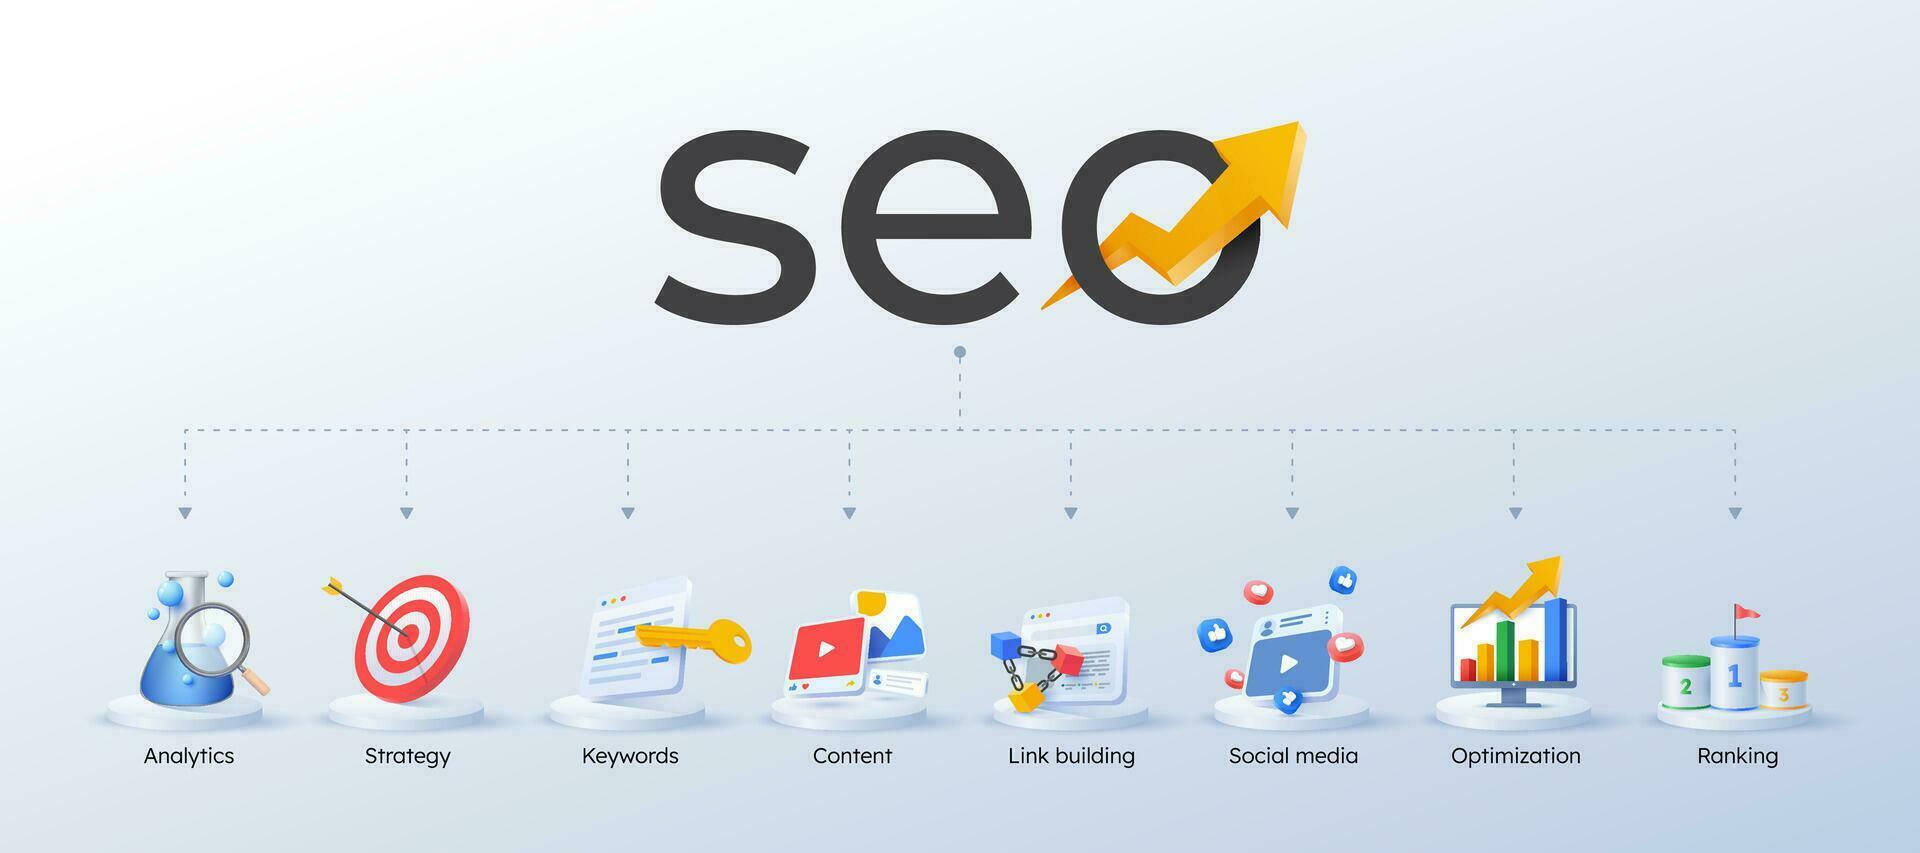 seo marketing process banner design vector